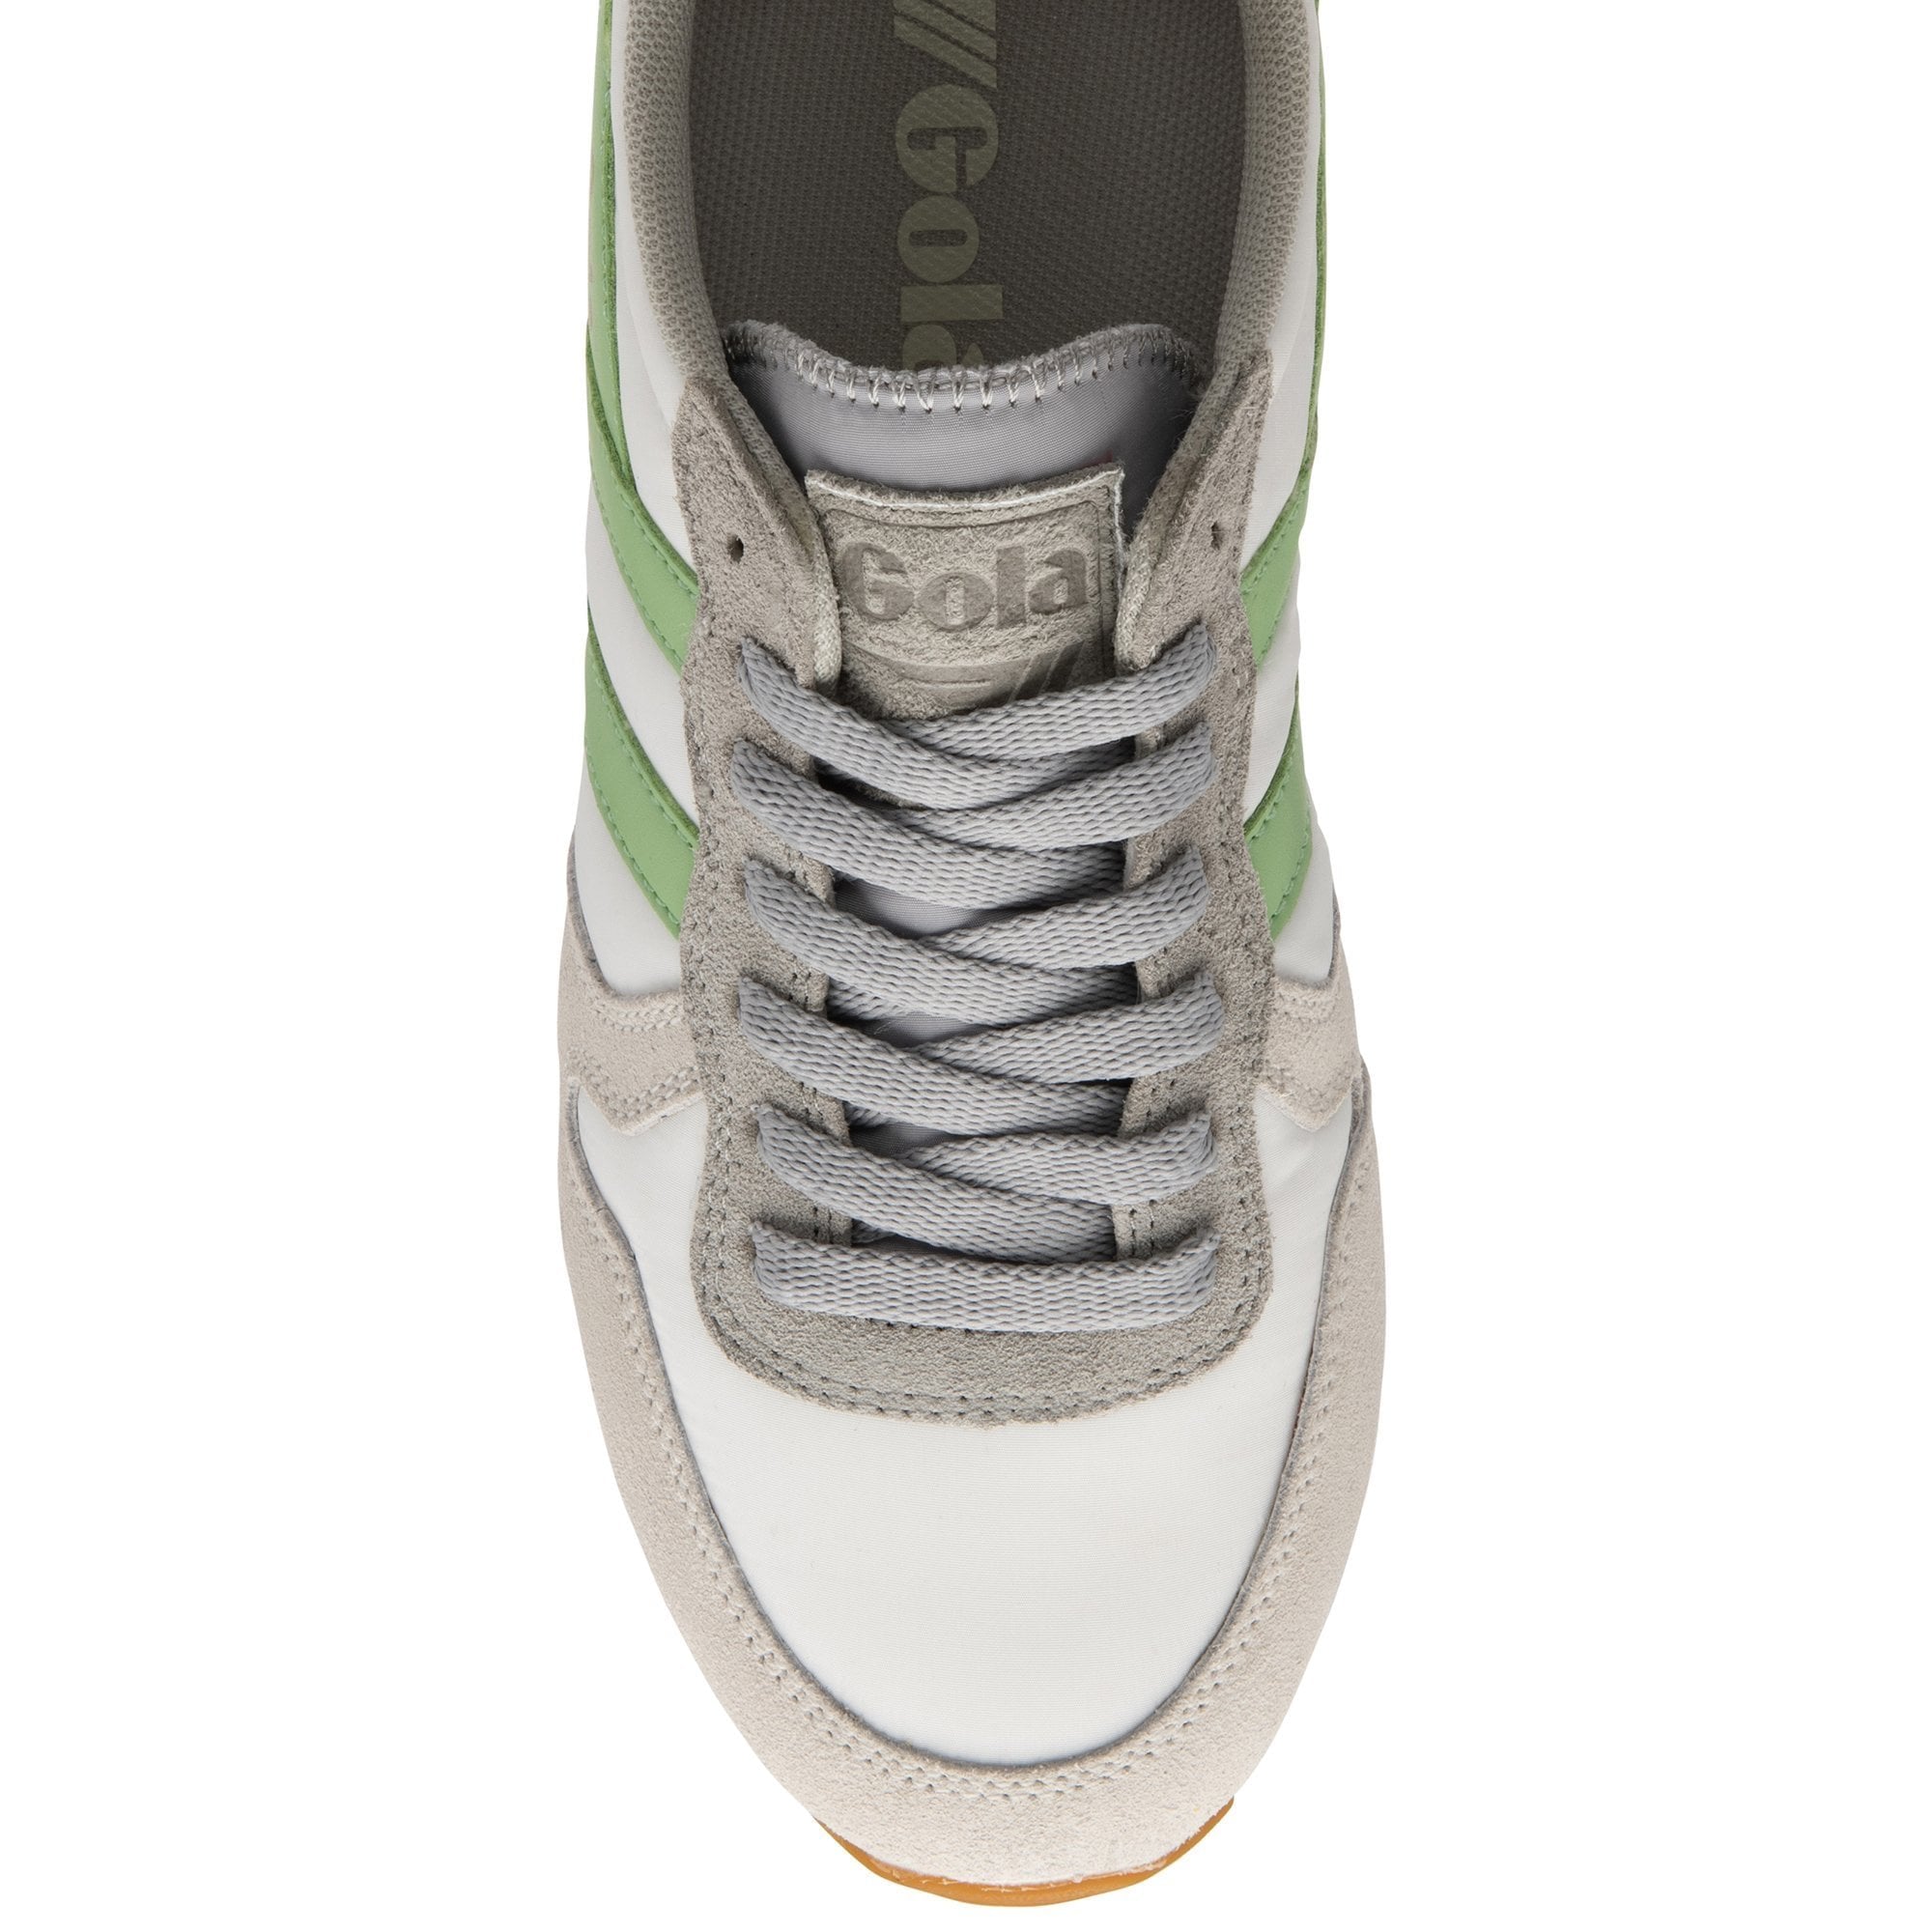 Gola Daytona Chute Grey Patina Green Sneakers